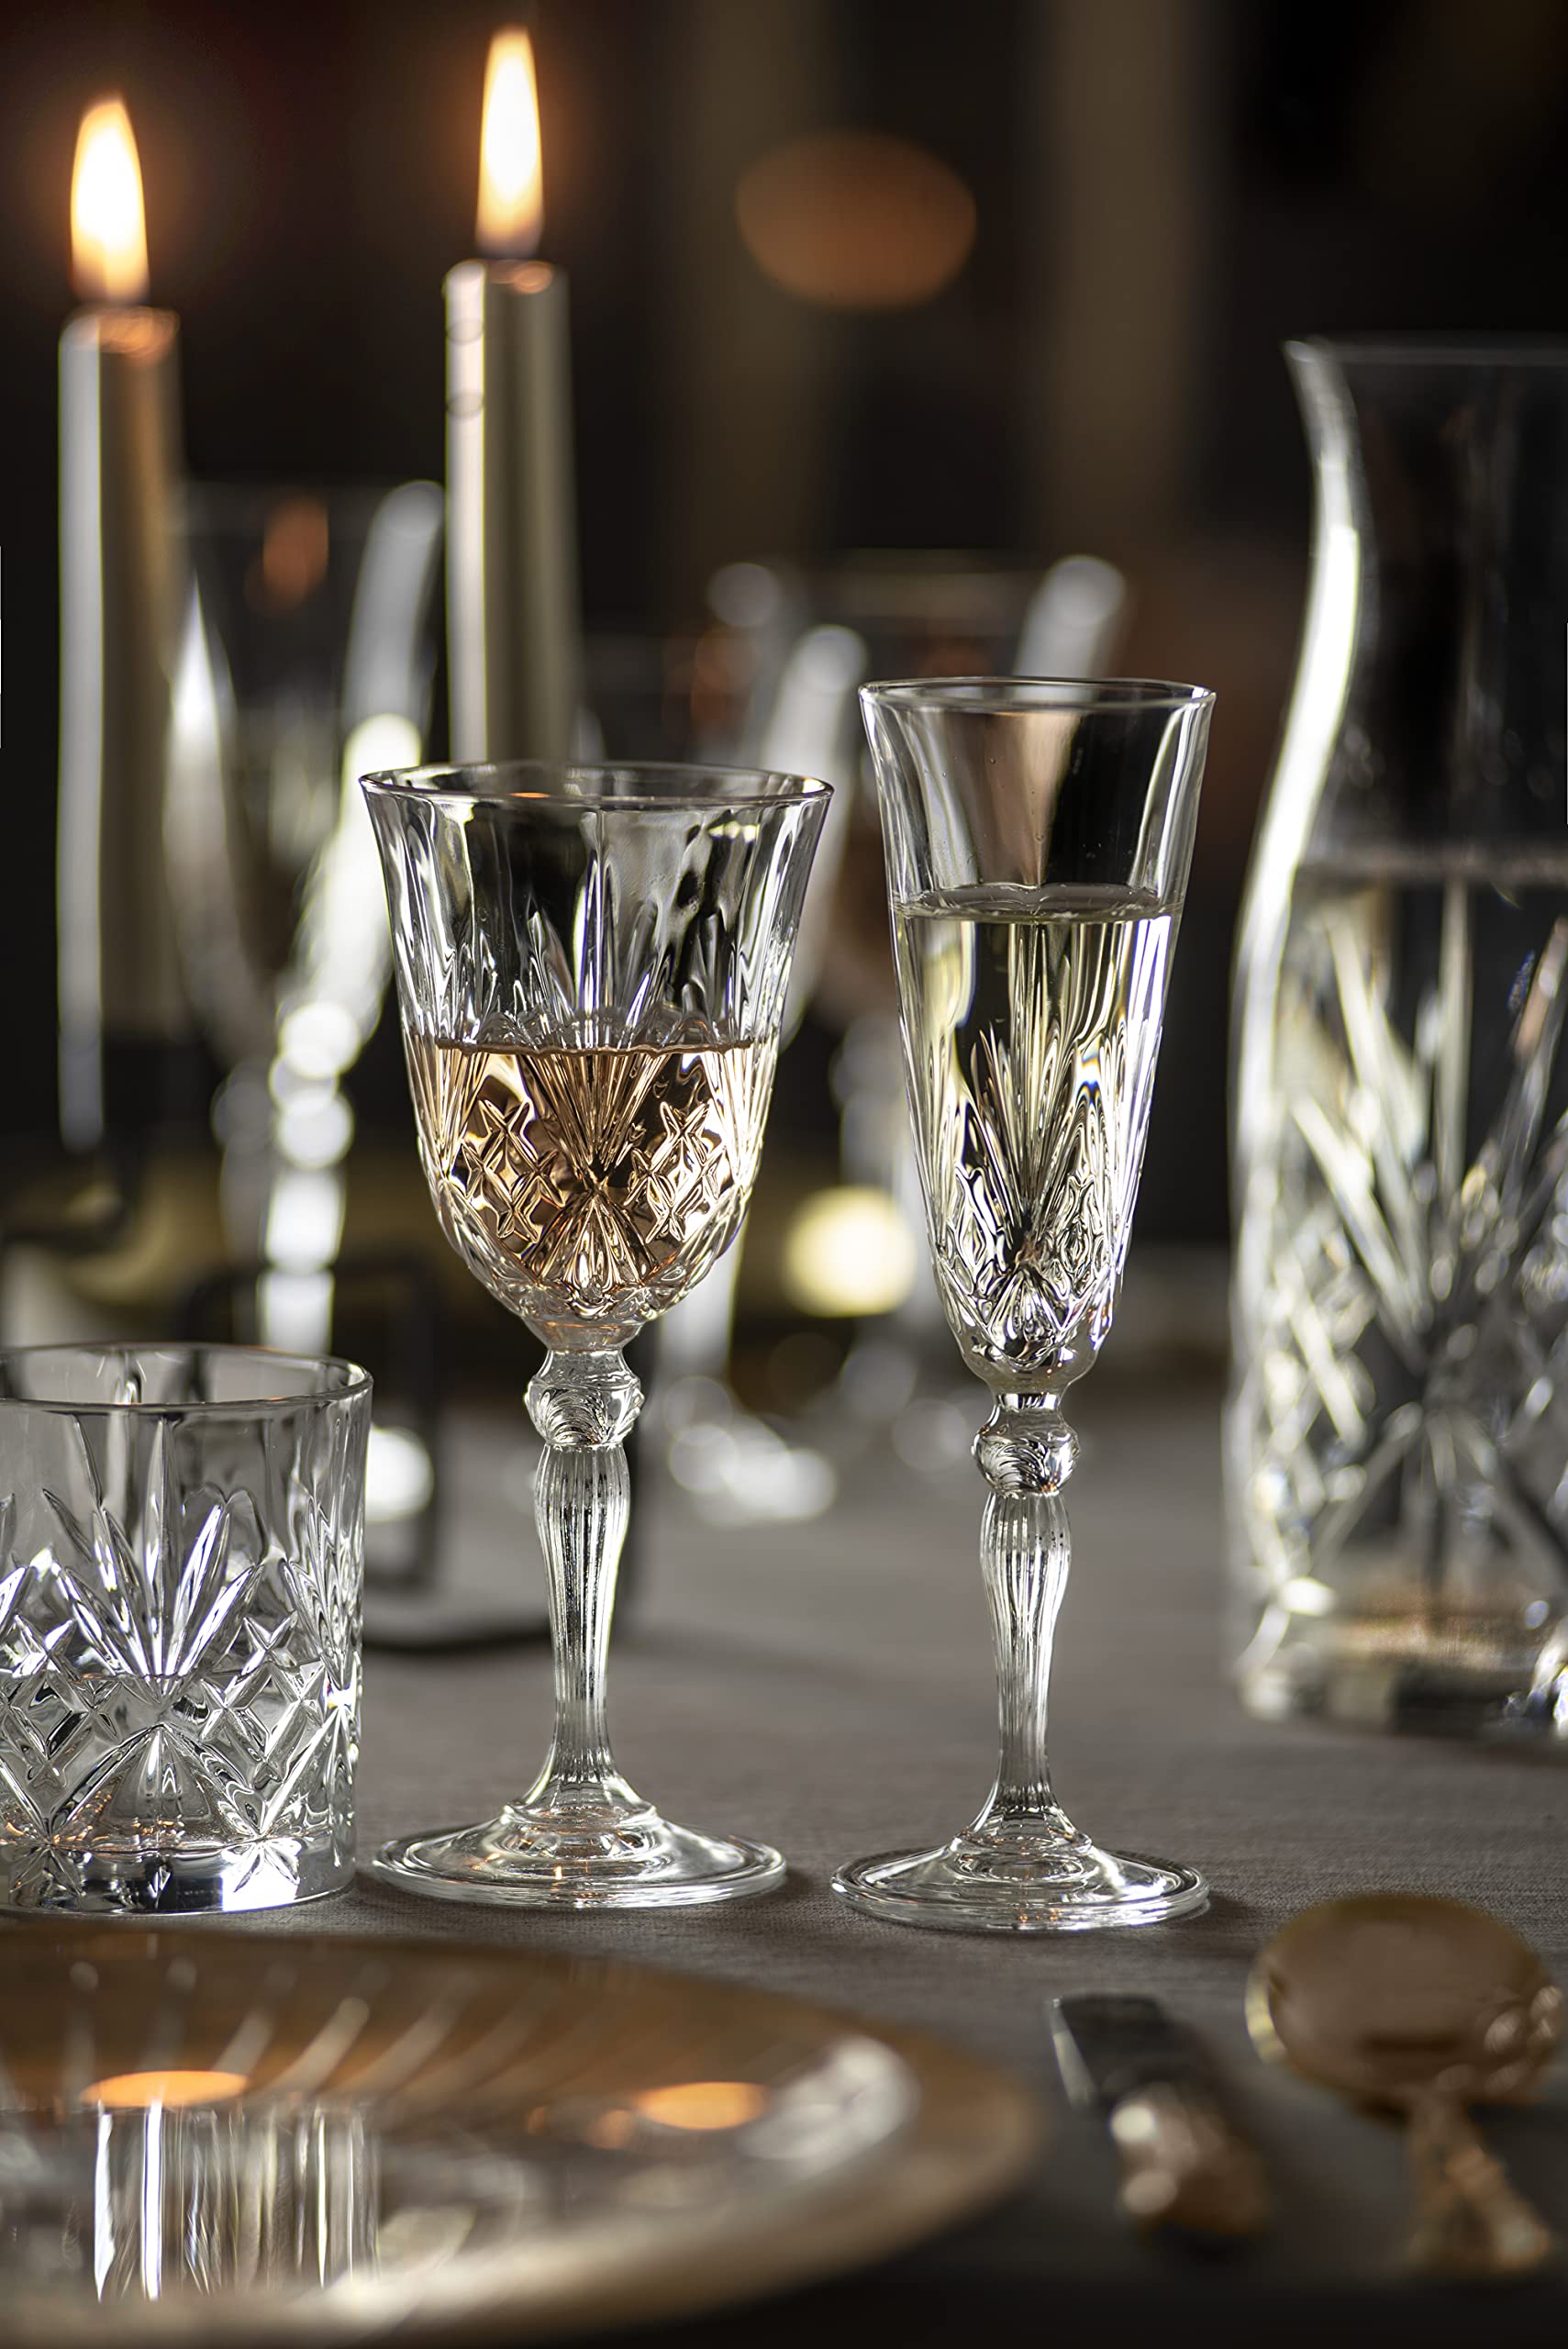 Barski Wine Glass - Goblet - Red Wine - White Wine - Water Glass - Stemmed Glasses - Set of 6 Goblets - Crystal like Glass - 7 oz. Beautifully Cut Designed Made in Europe